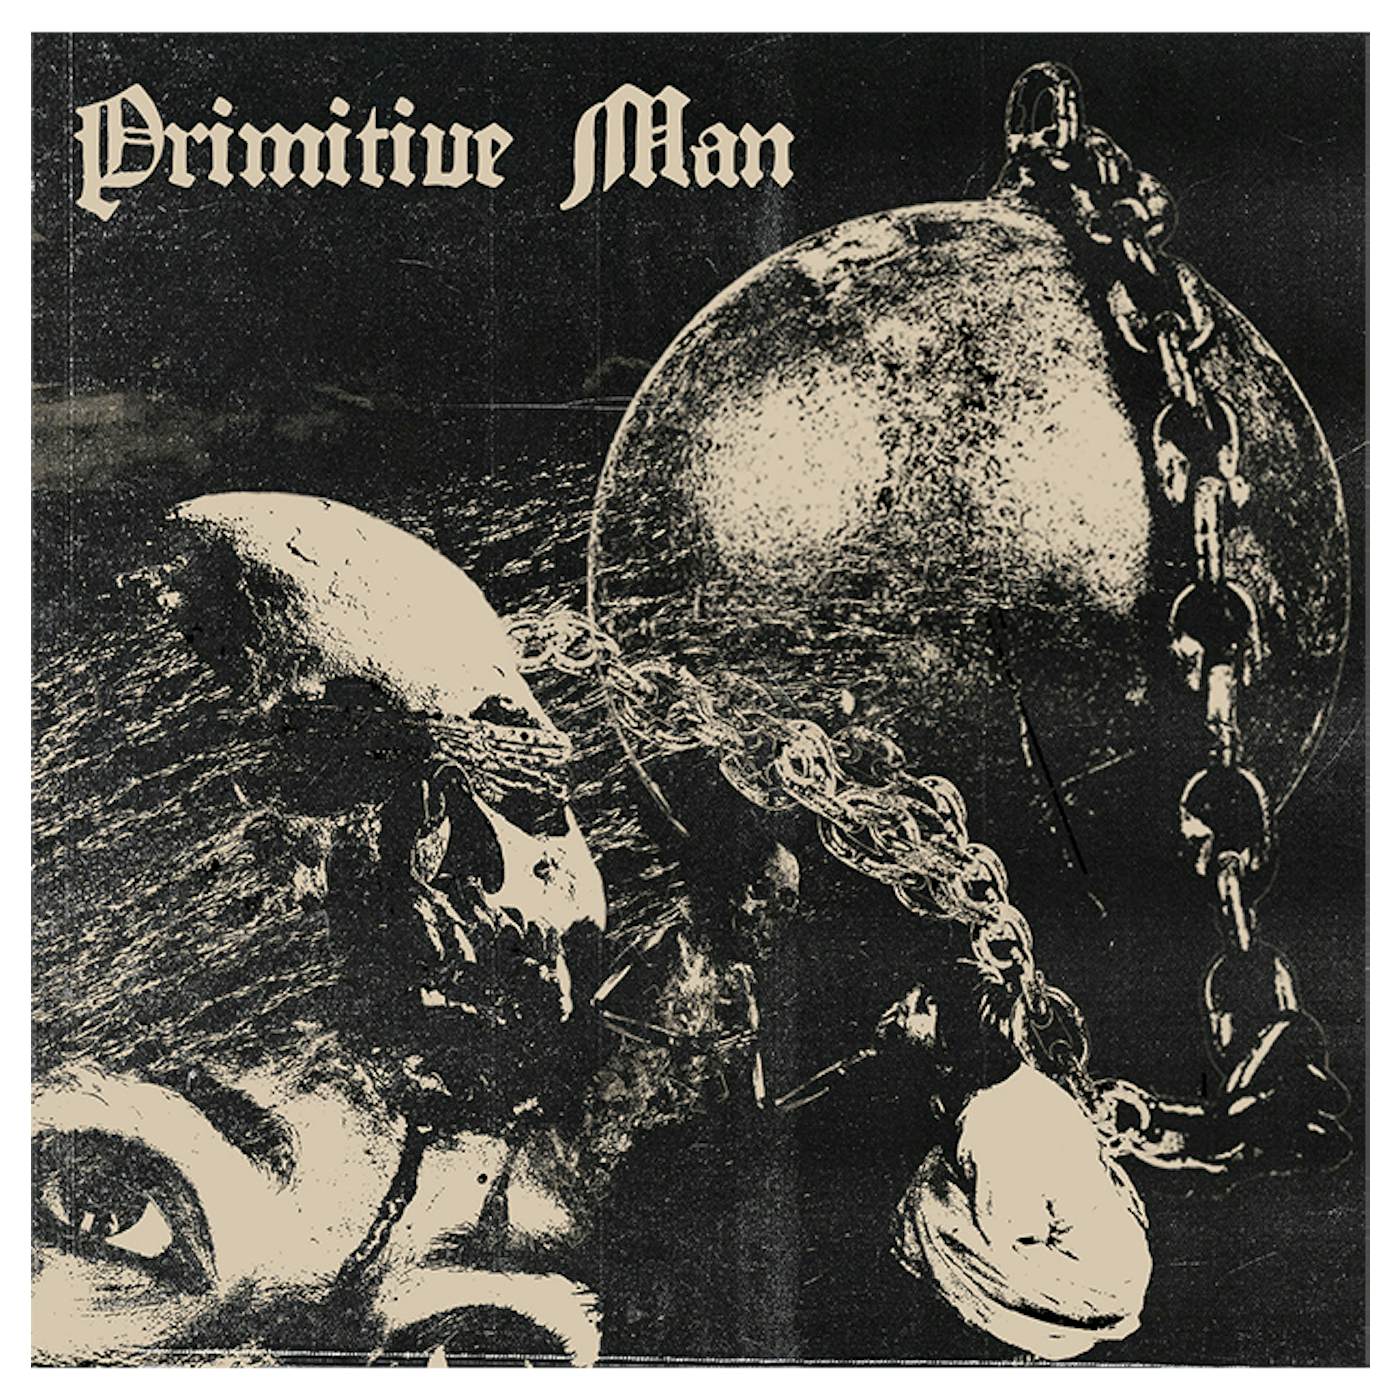 PRIMITIVE MAN - 'Caustic' CD